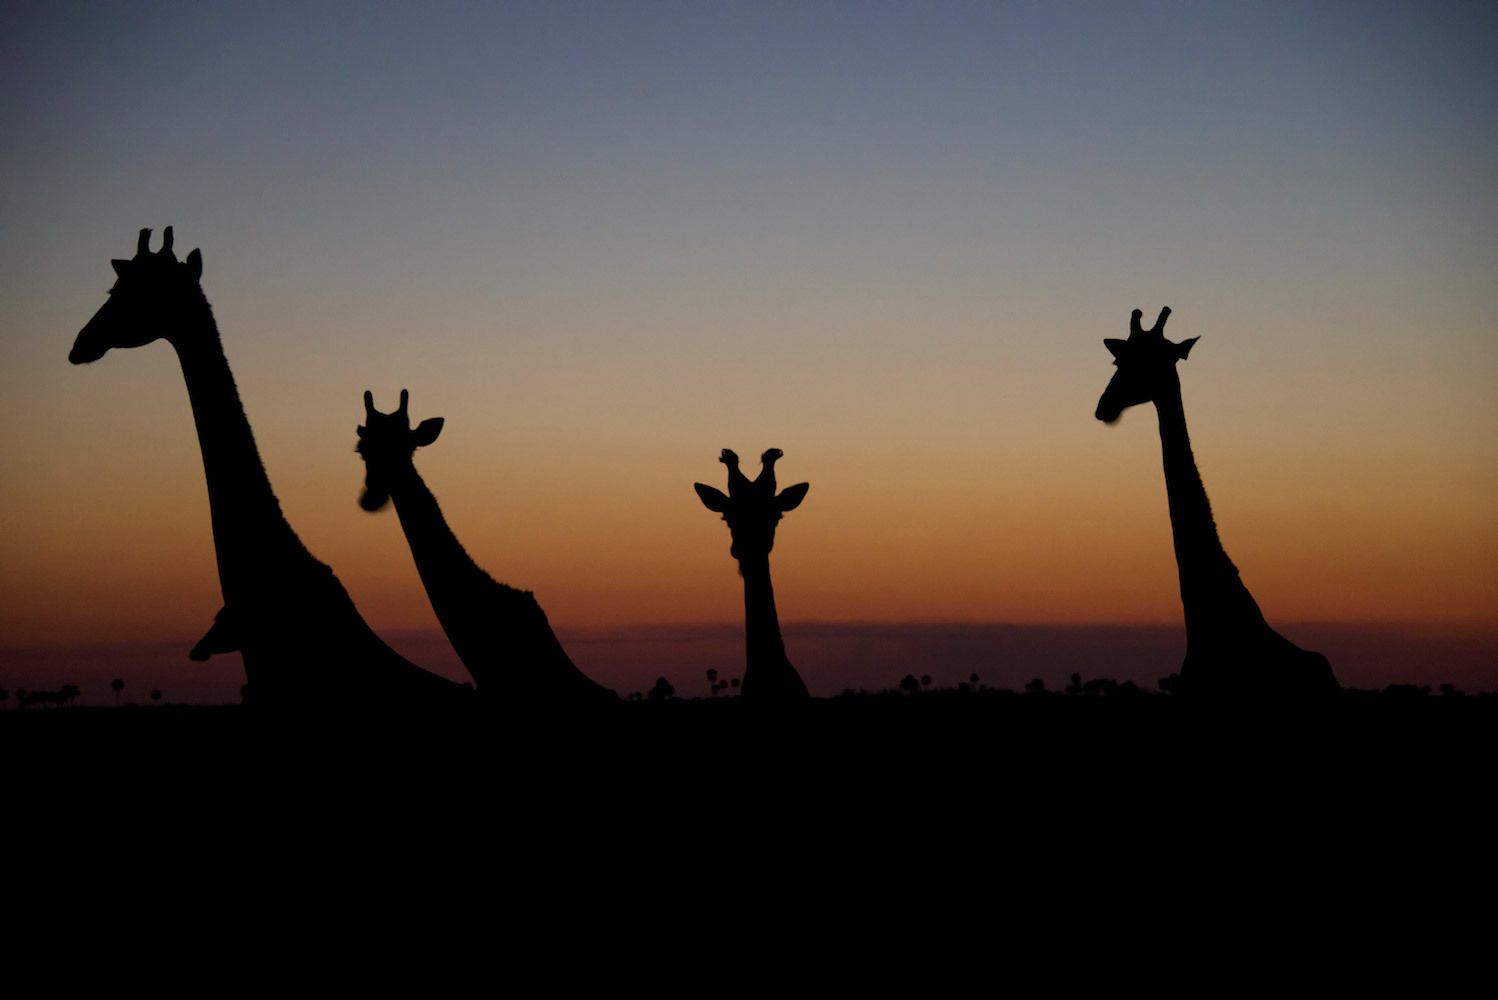 "Giraffe Silhouette"